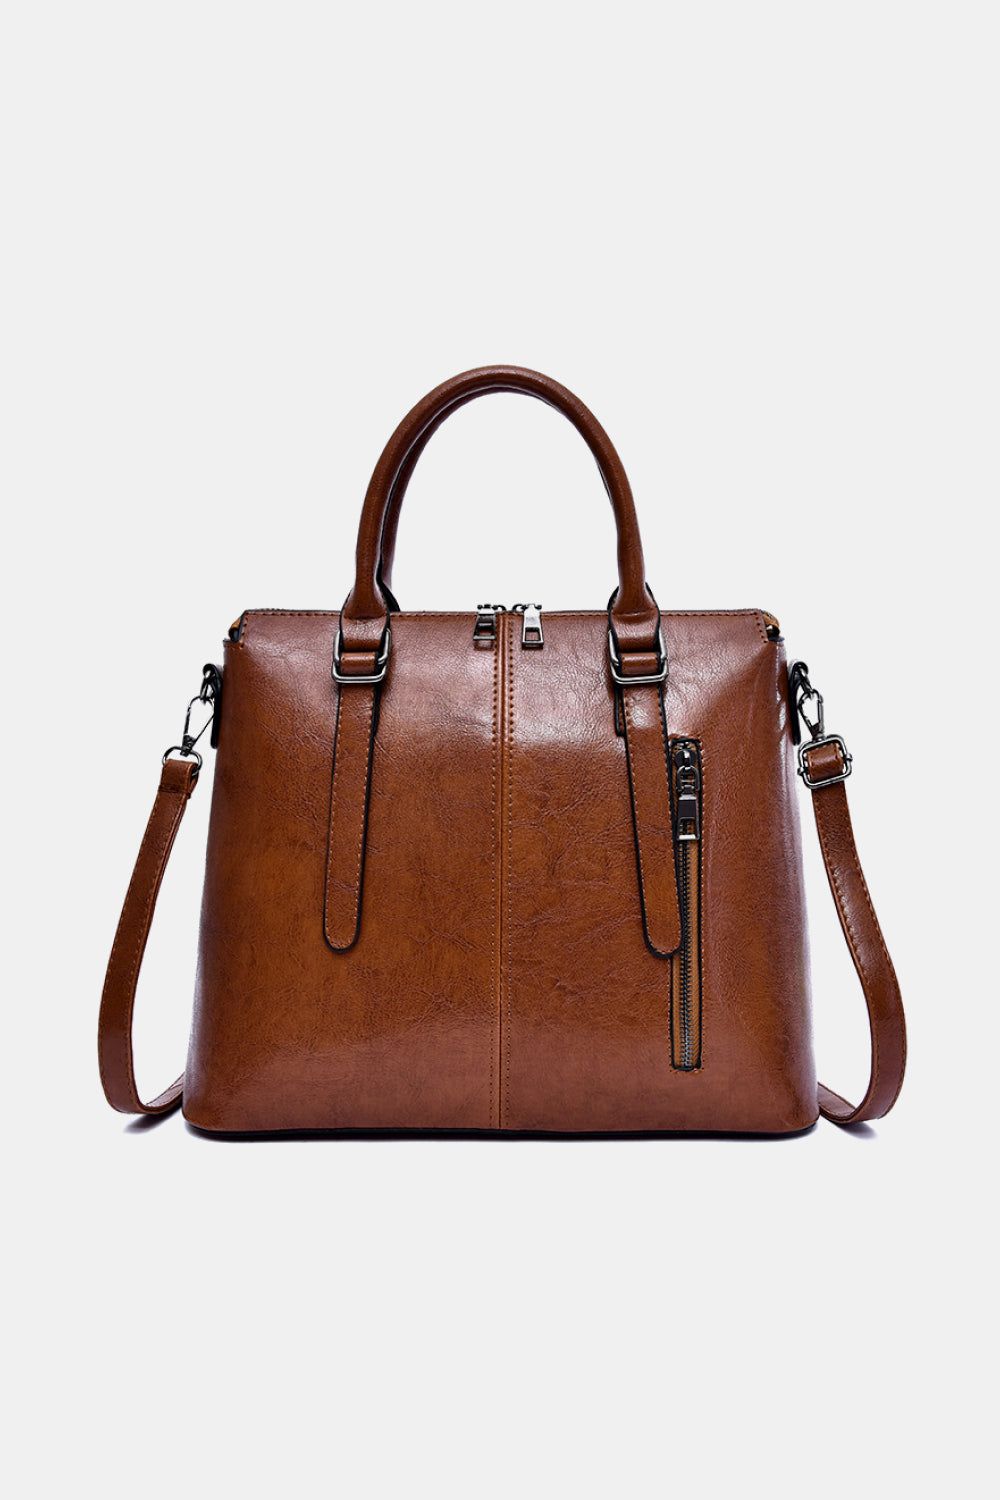 PU Leather Handbag.